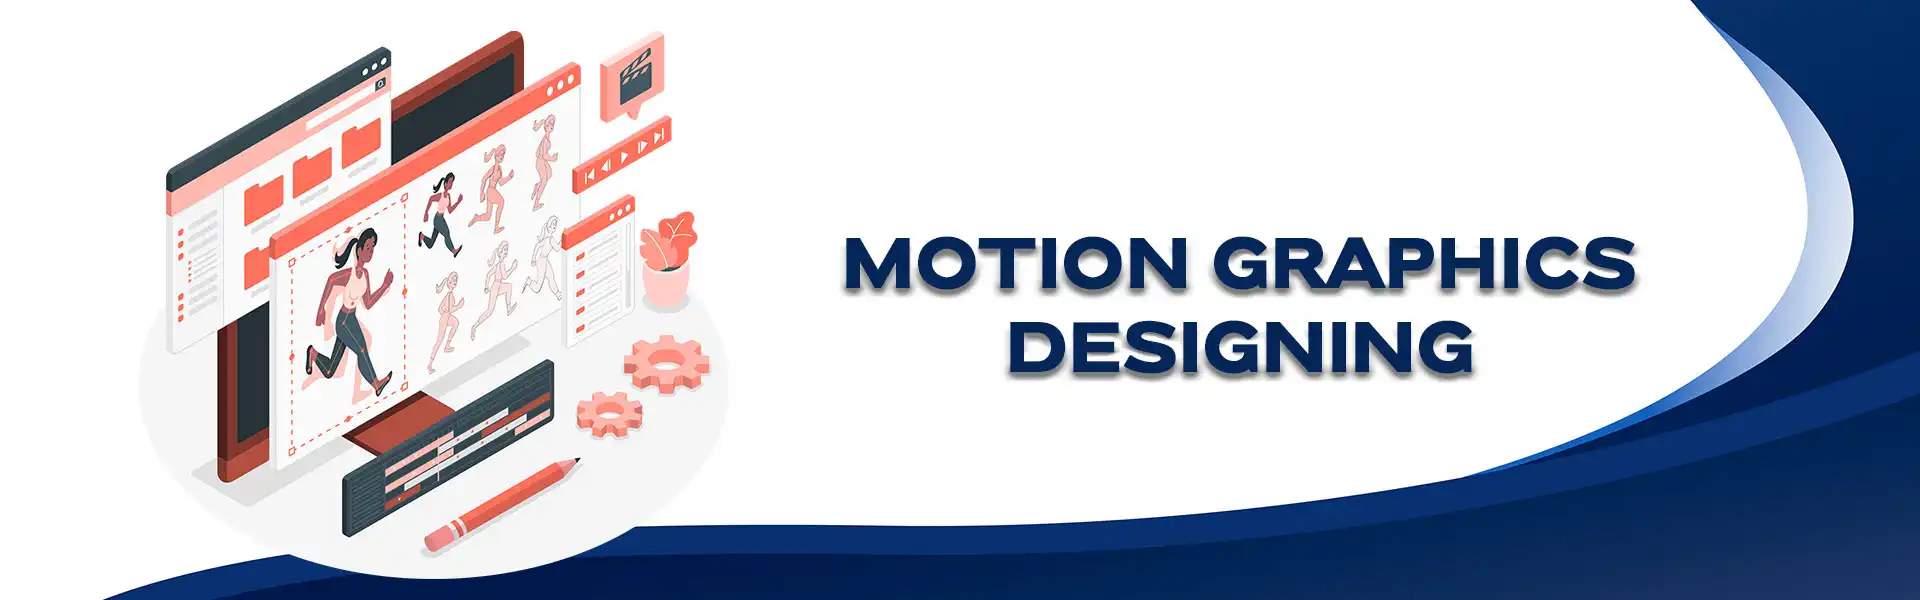 Motion Graphics Designing